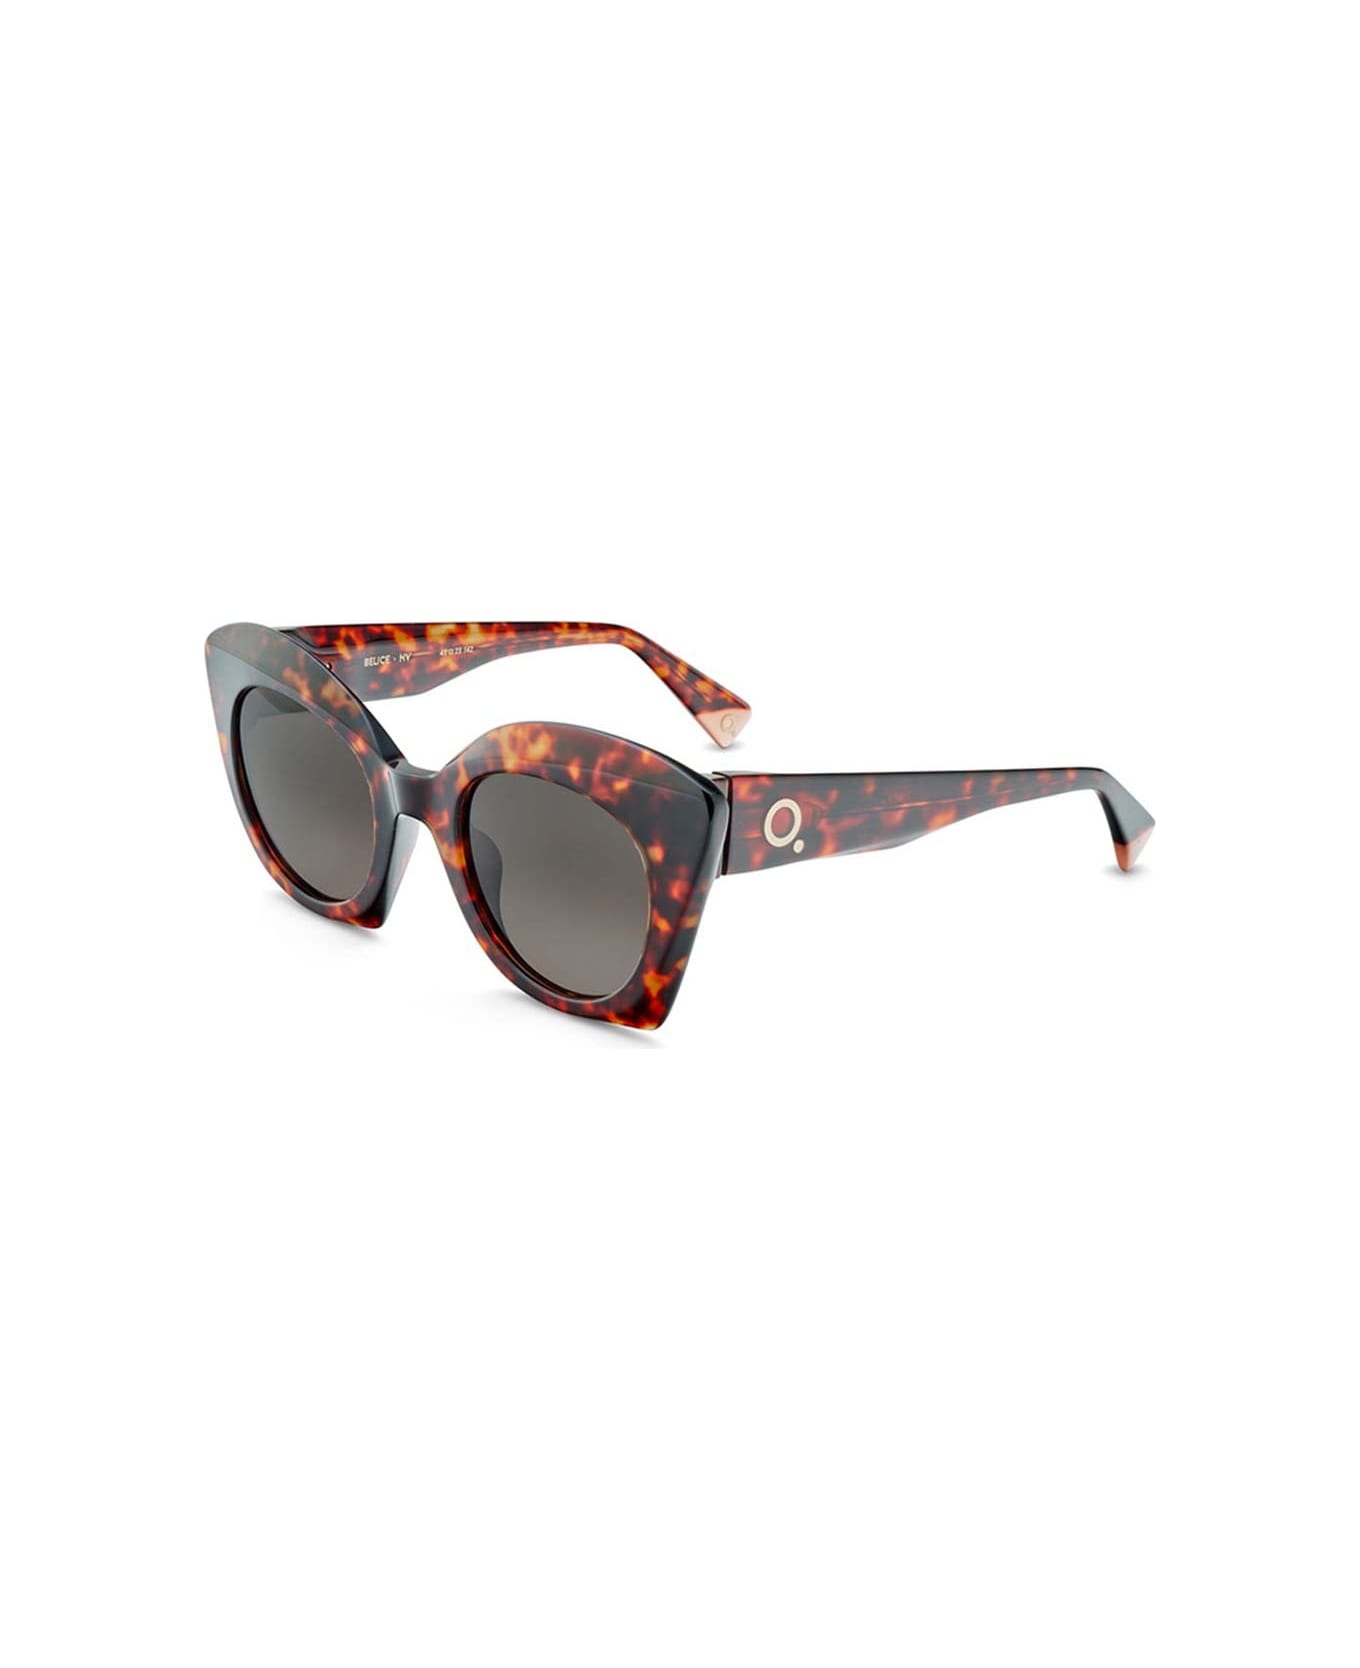 Etnia Barcelona Sunglasses - Havana/Marrone